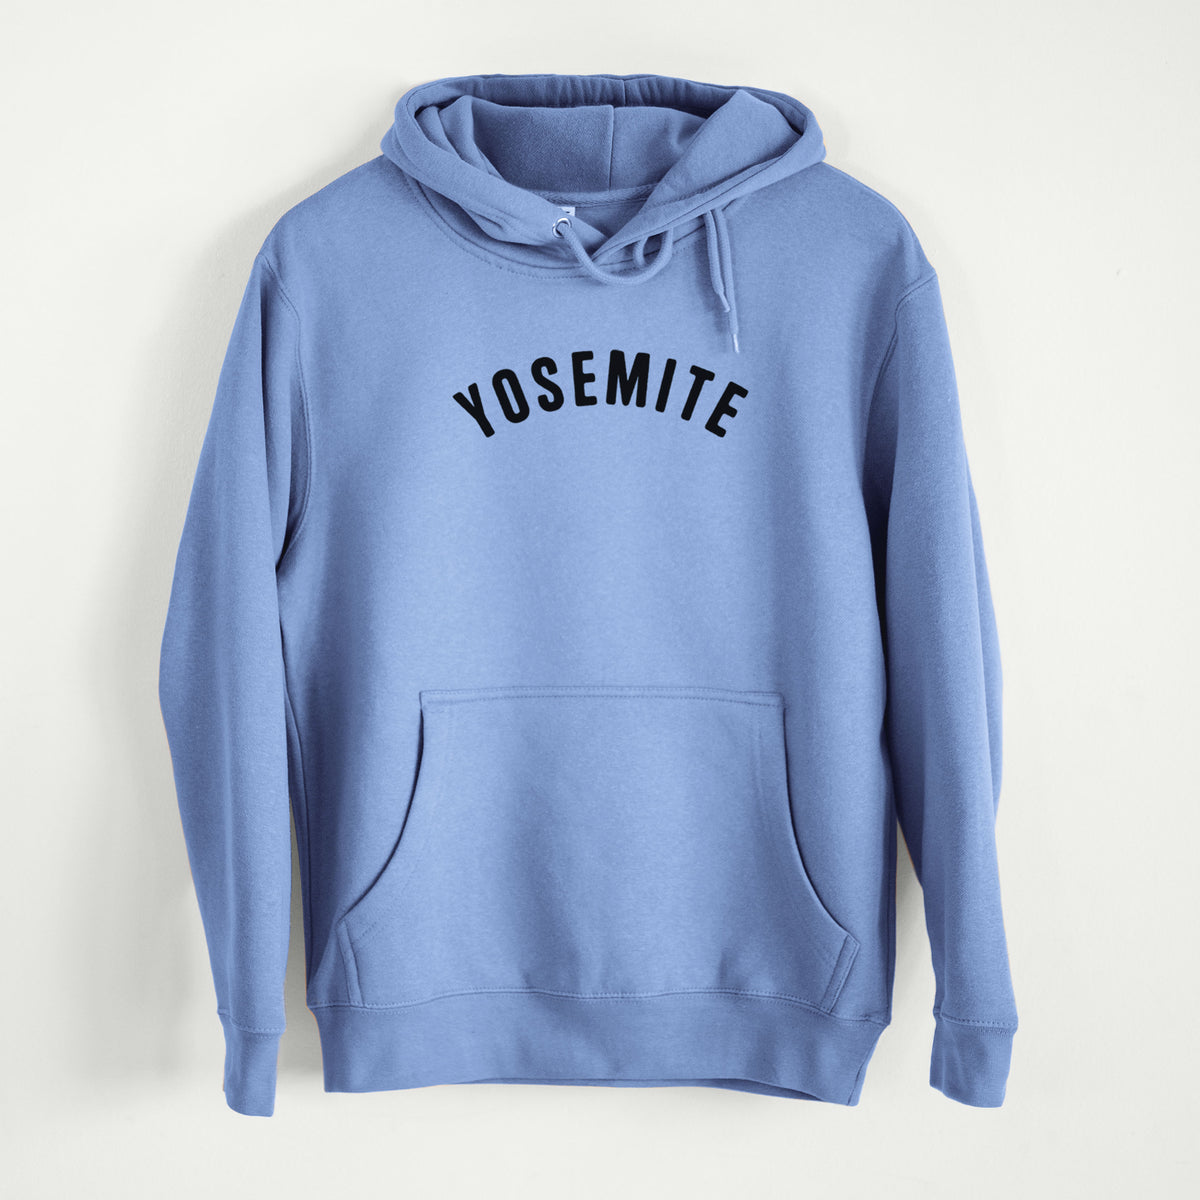 Yosemite  - Mid-Weight Unisex Premium Blend Hoodie